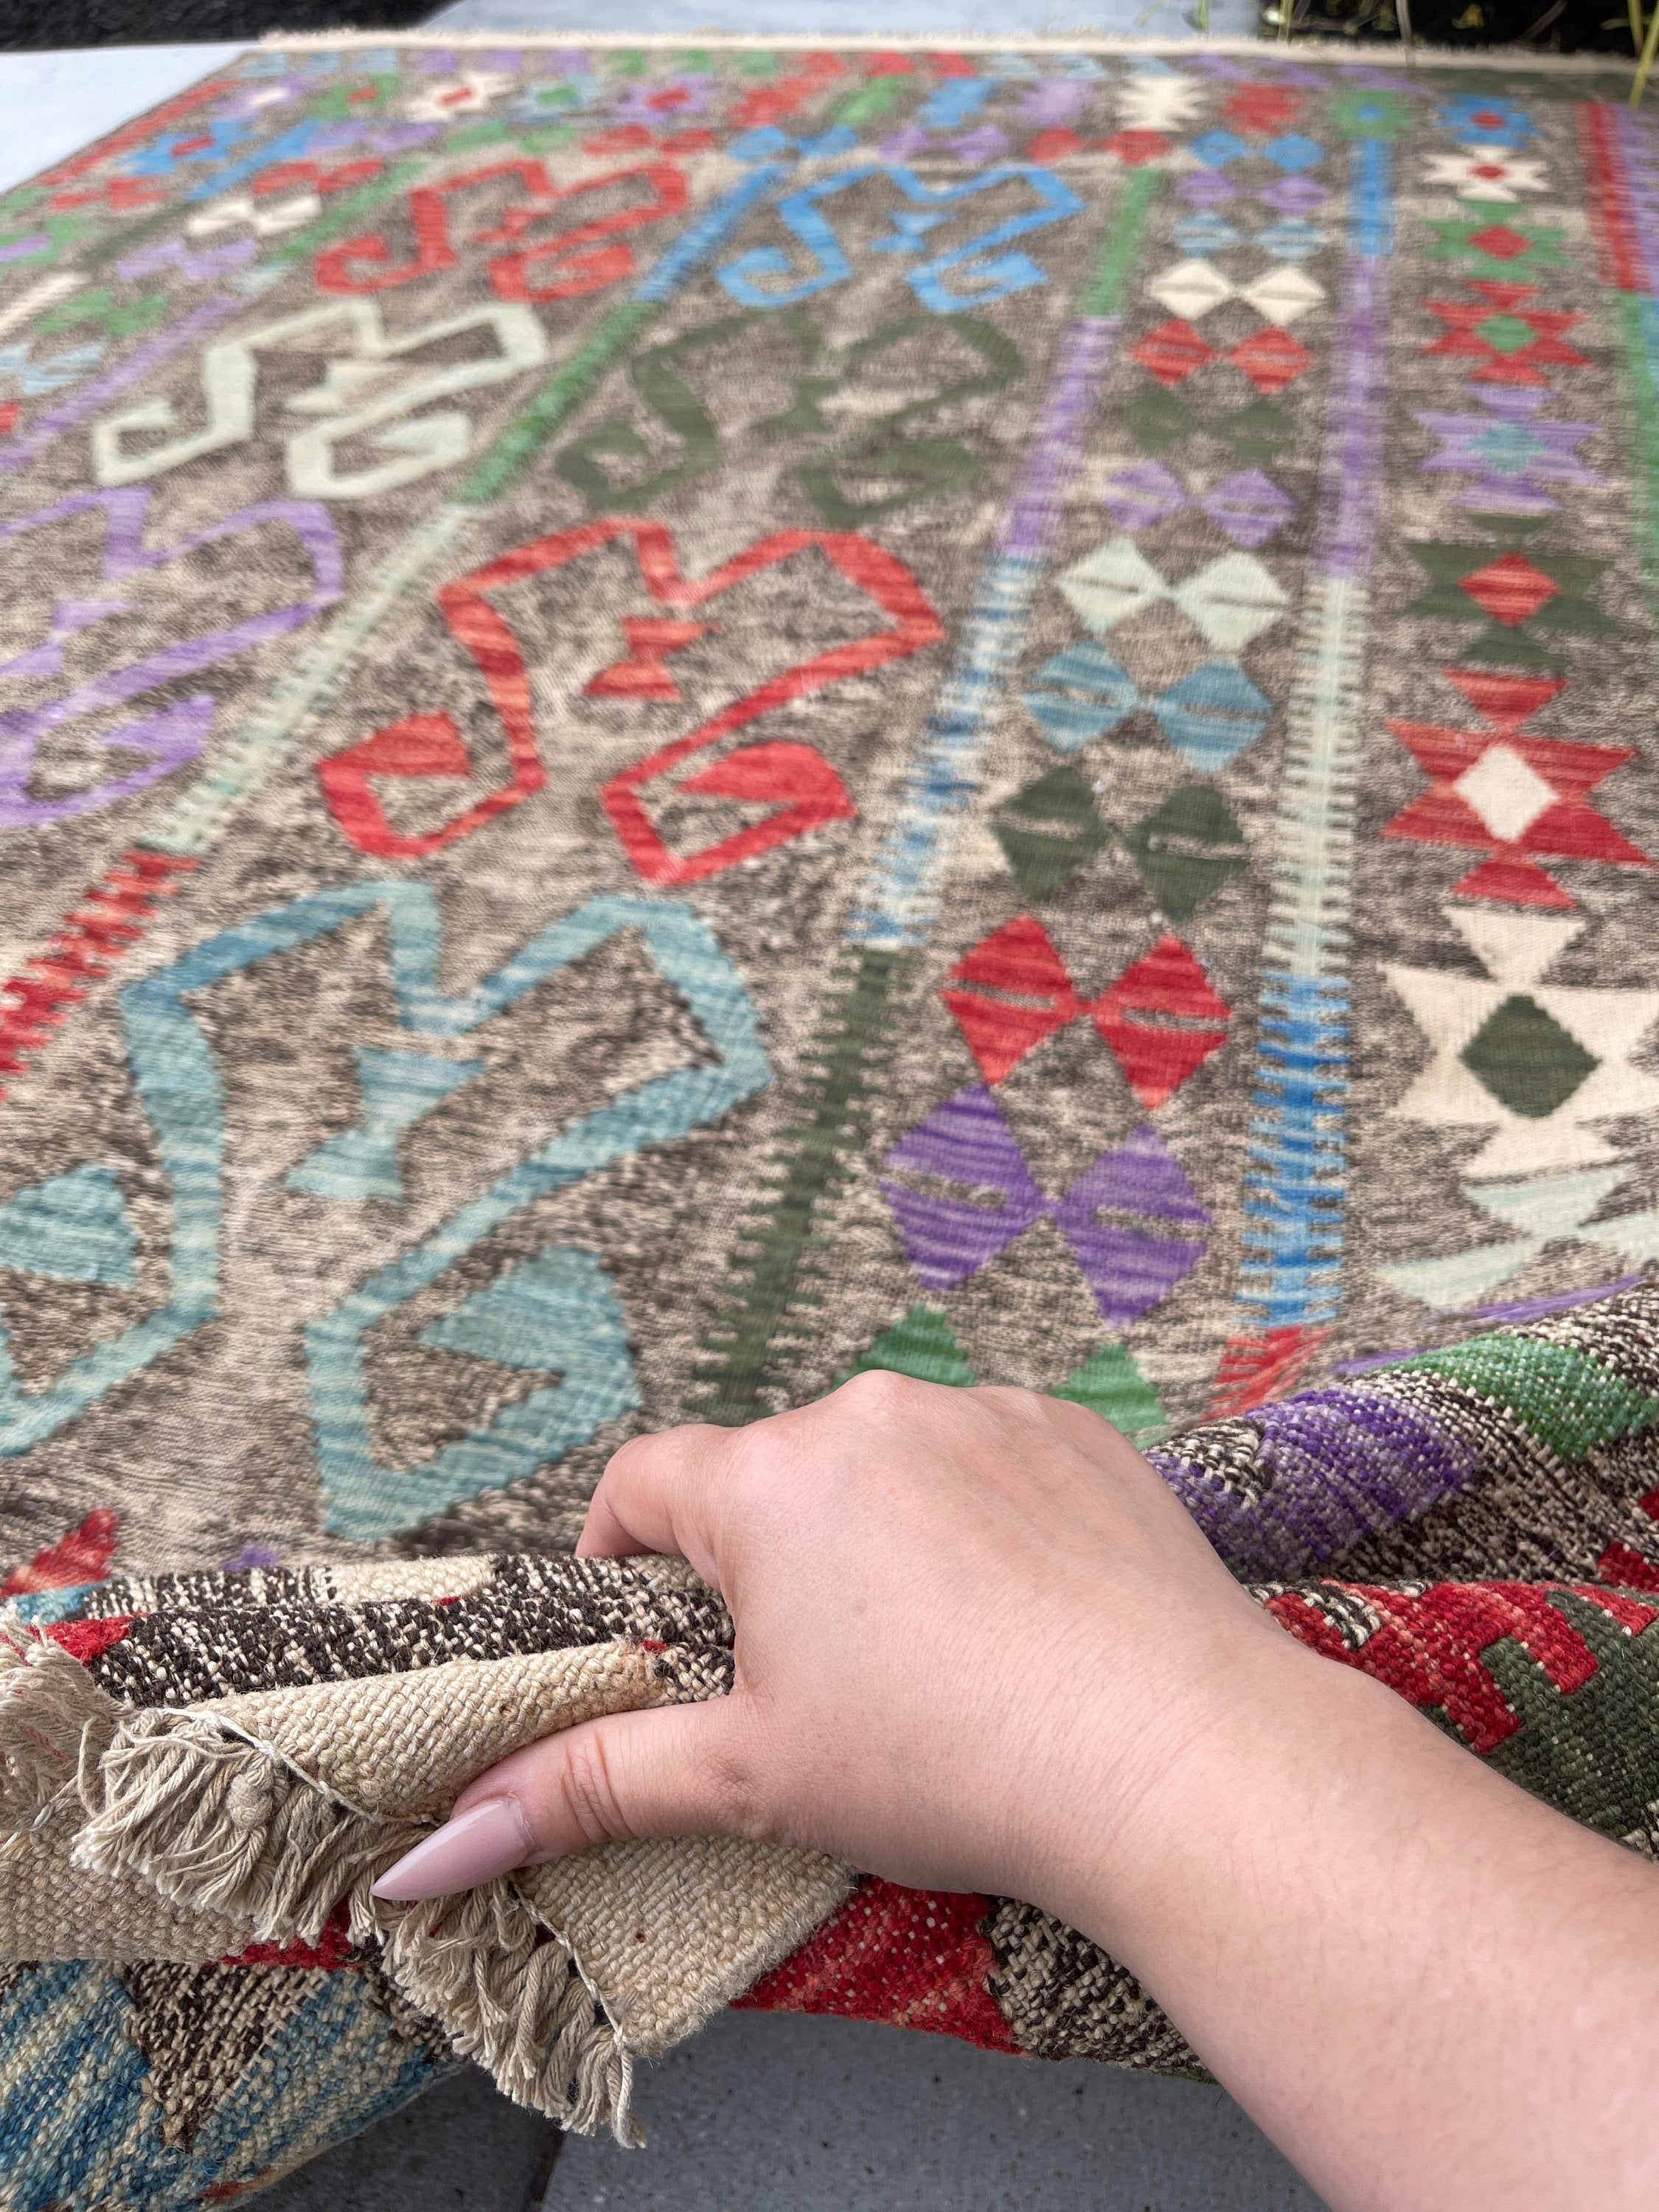 6x9 (180x275) Handmade Afghan Kilim Rug | Olive Green Burnt Orange Purple Blue | Boho Bohemian Tribal Moroccan Turkish Wool Outdoor